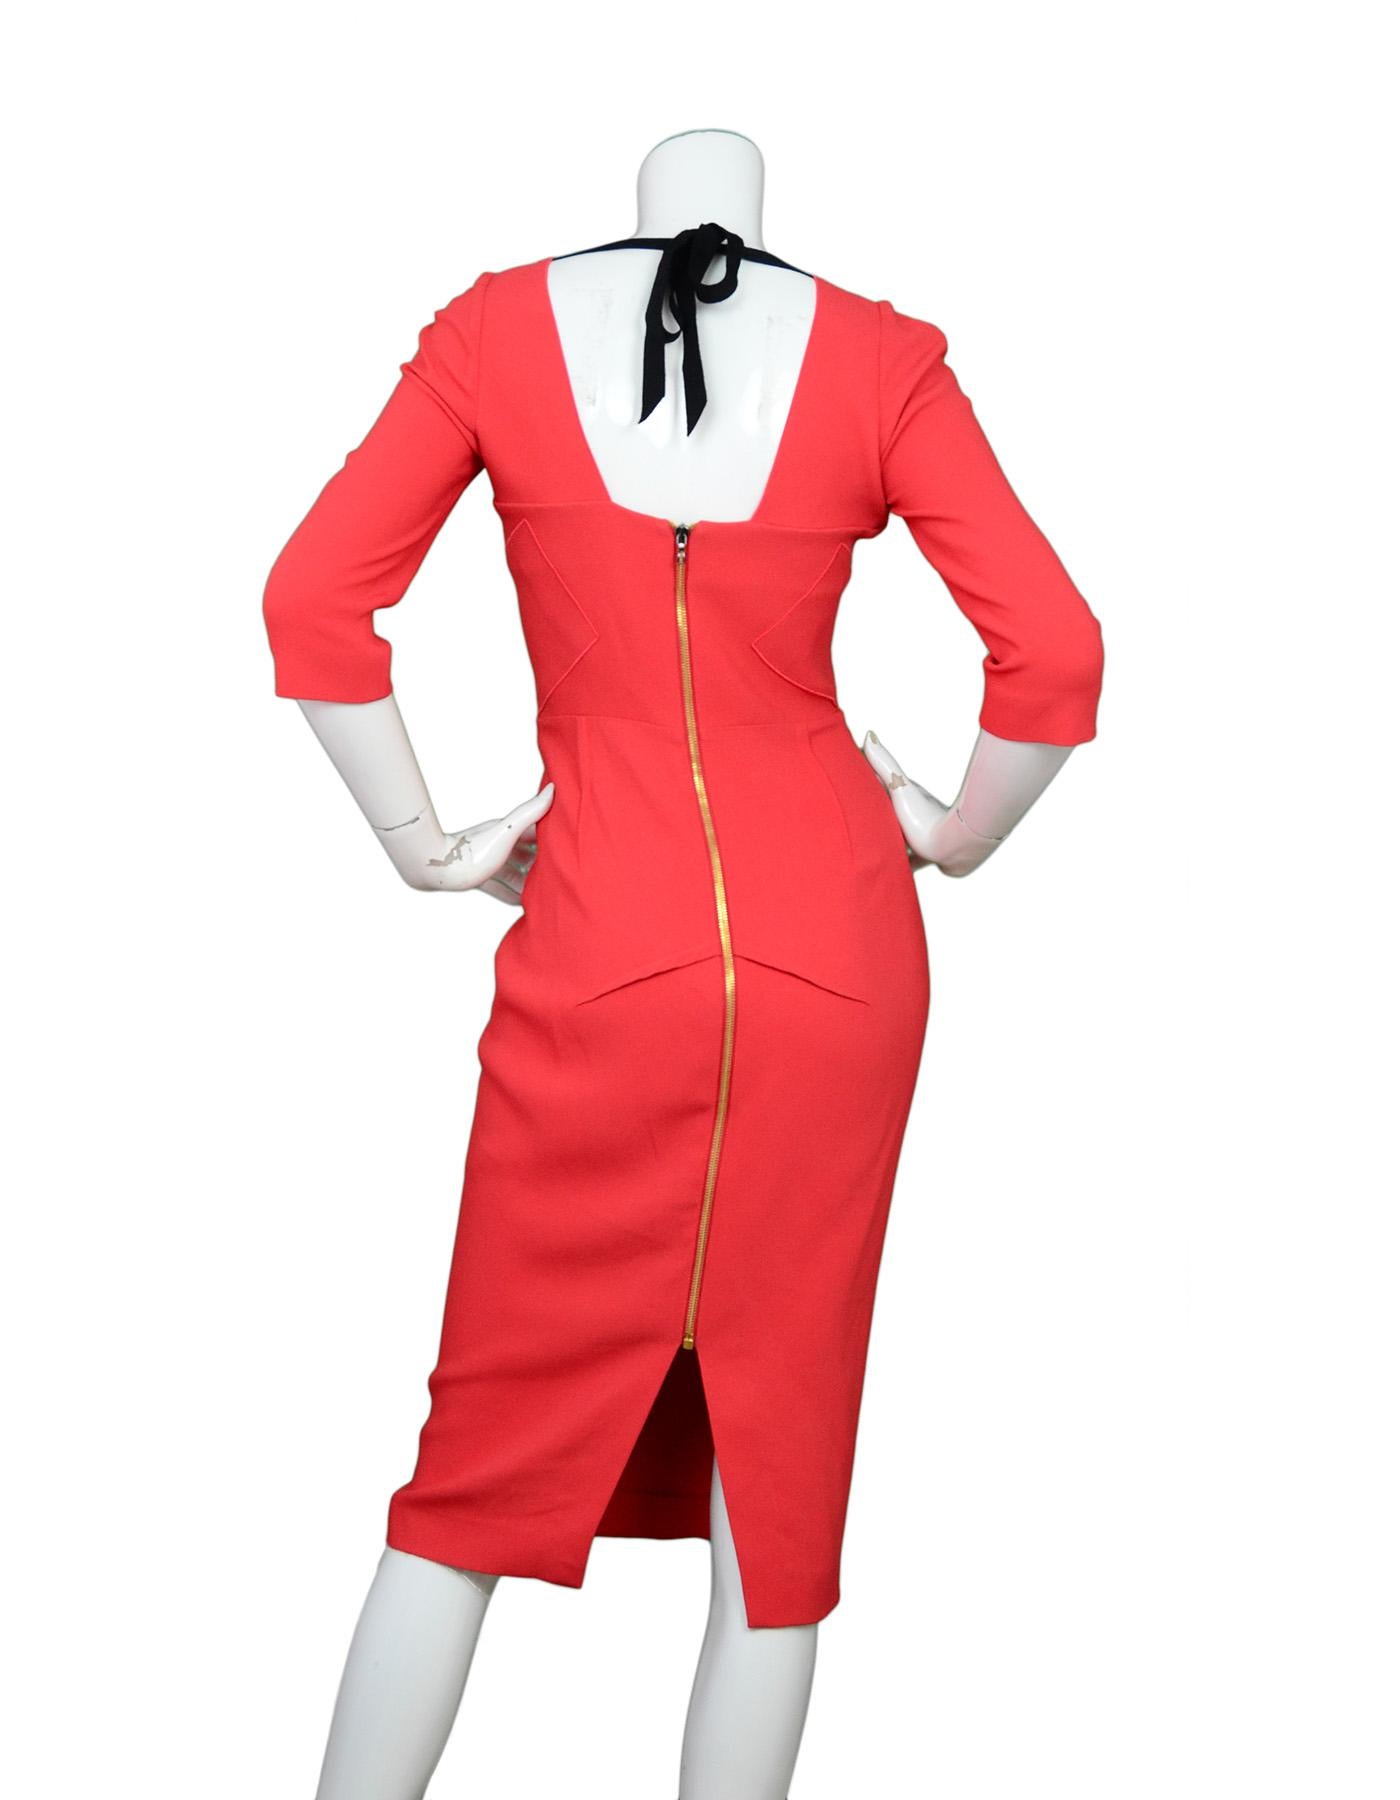 Roland Mouret Red 3/4 Sleeve Asymmetrical Neckline Dress Sz 10 (Rot)